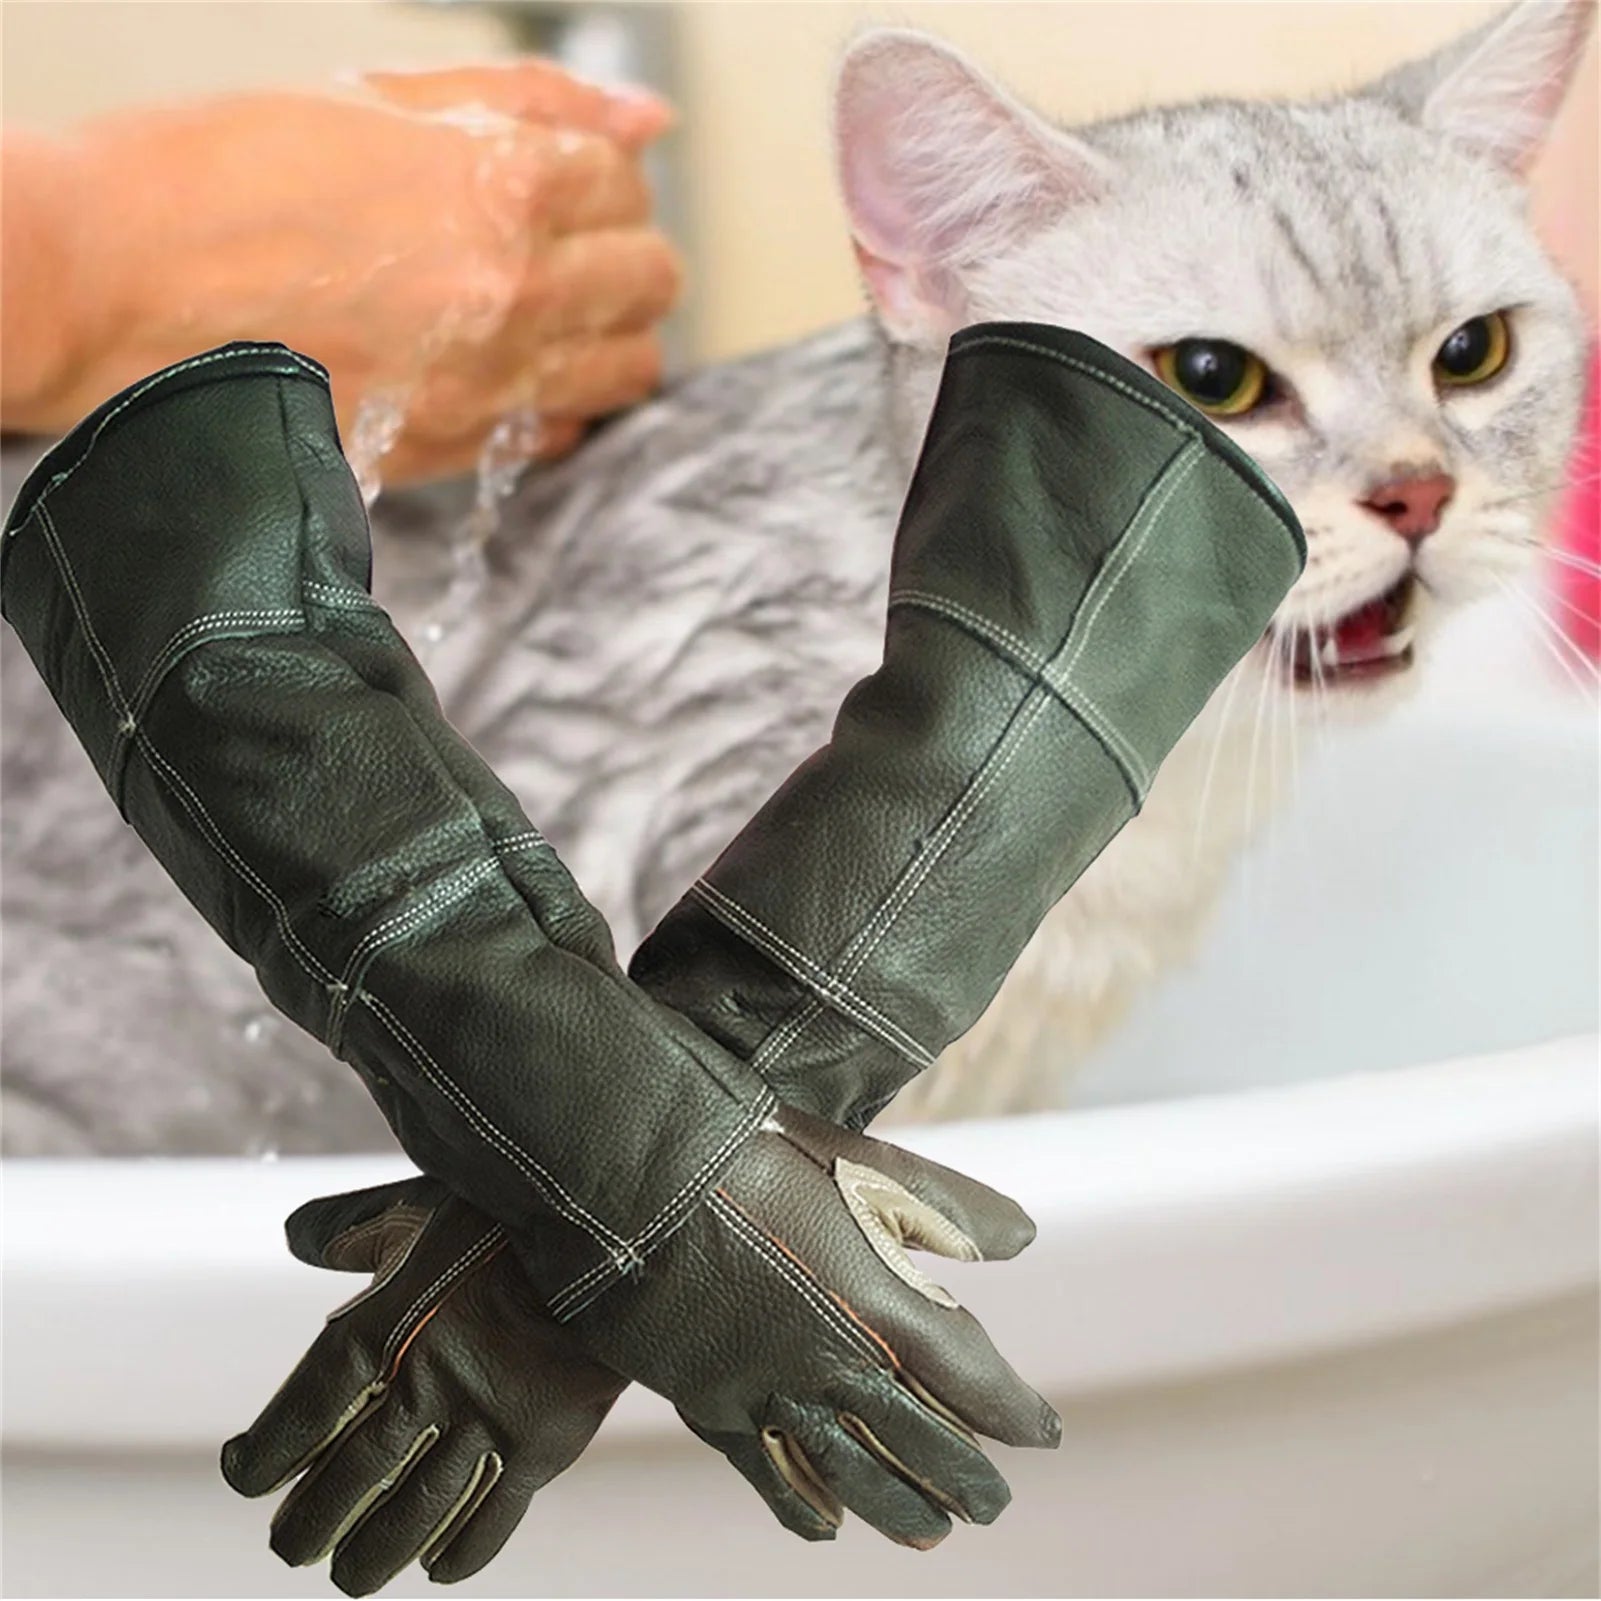 Dog Training Gloves - 1 pair / United States